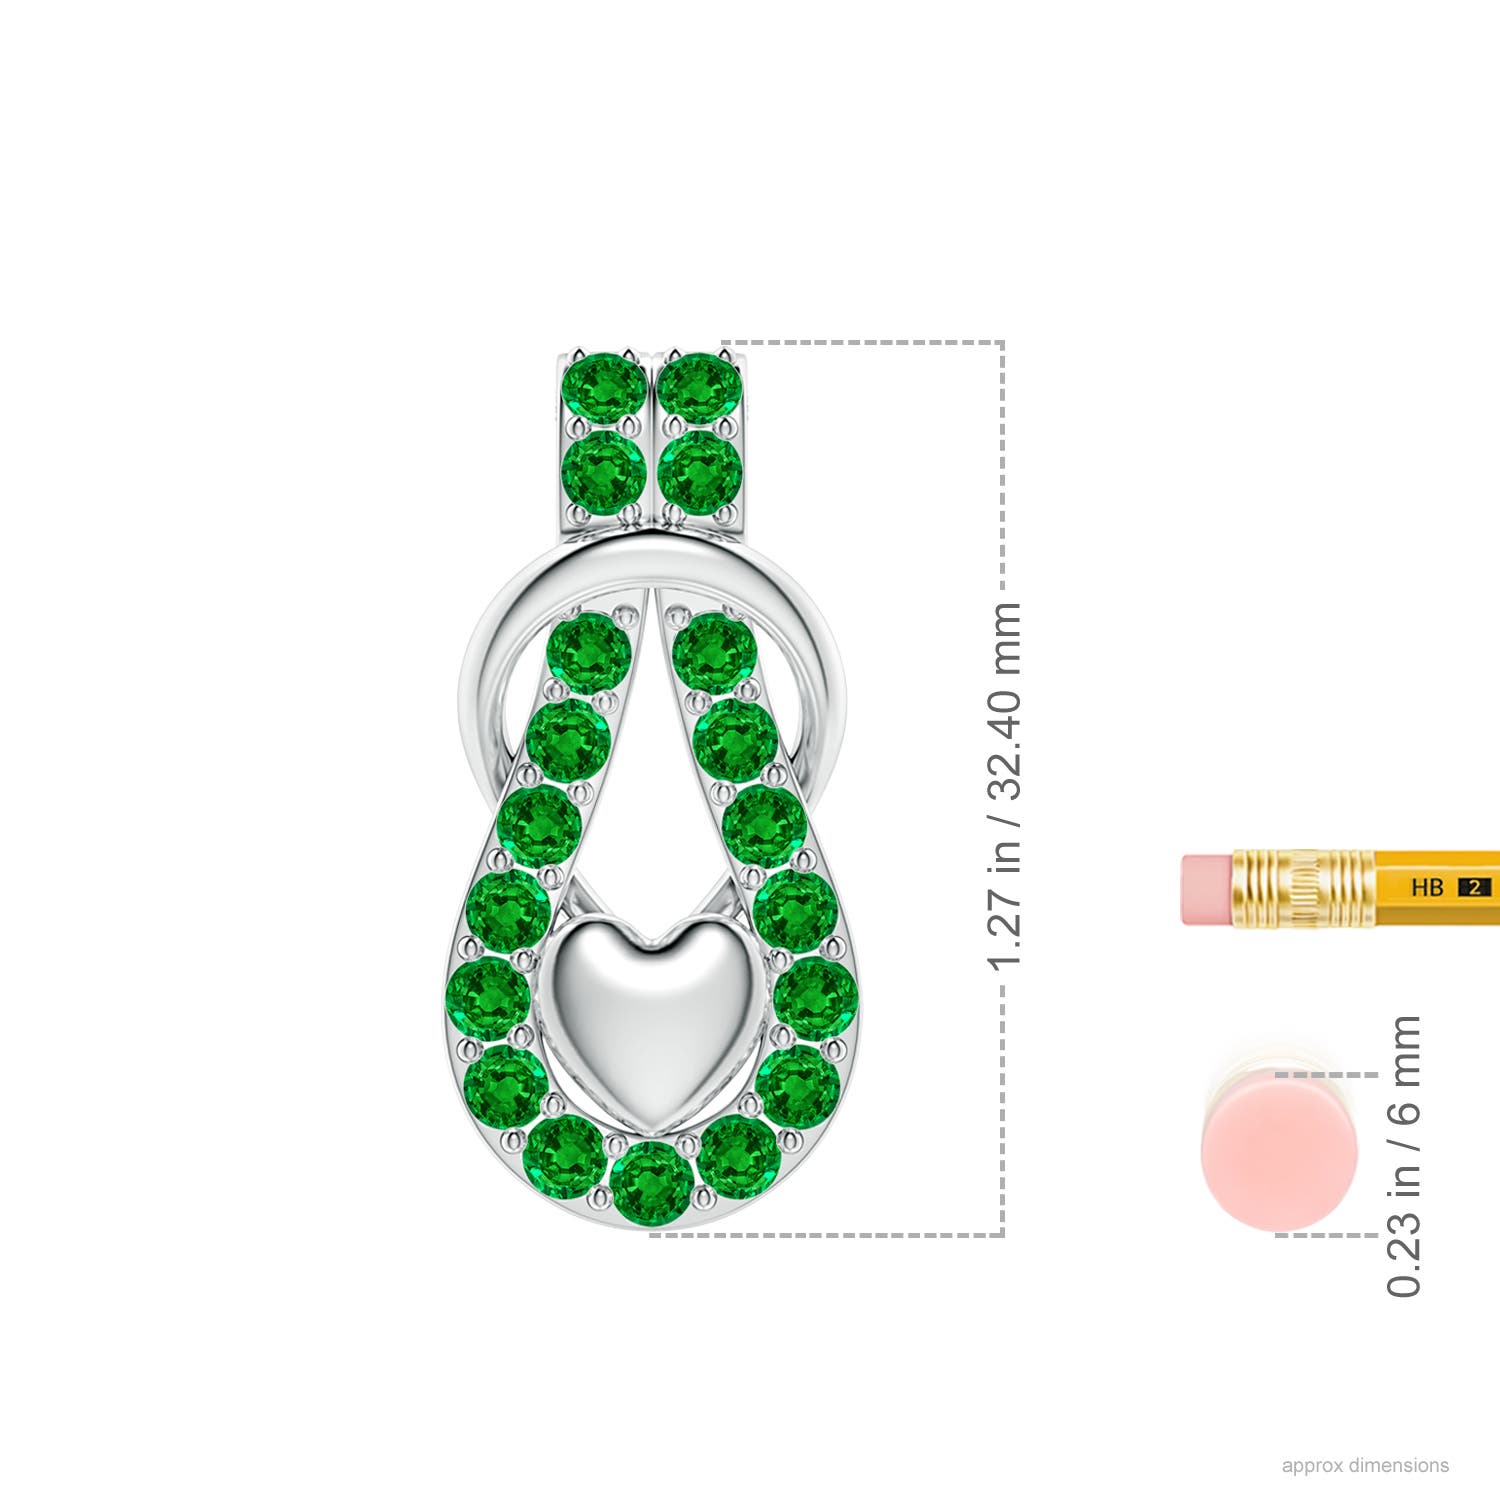 AAAA - Emerald / 1.9 CT / 18 KT White Gold